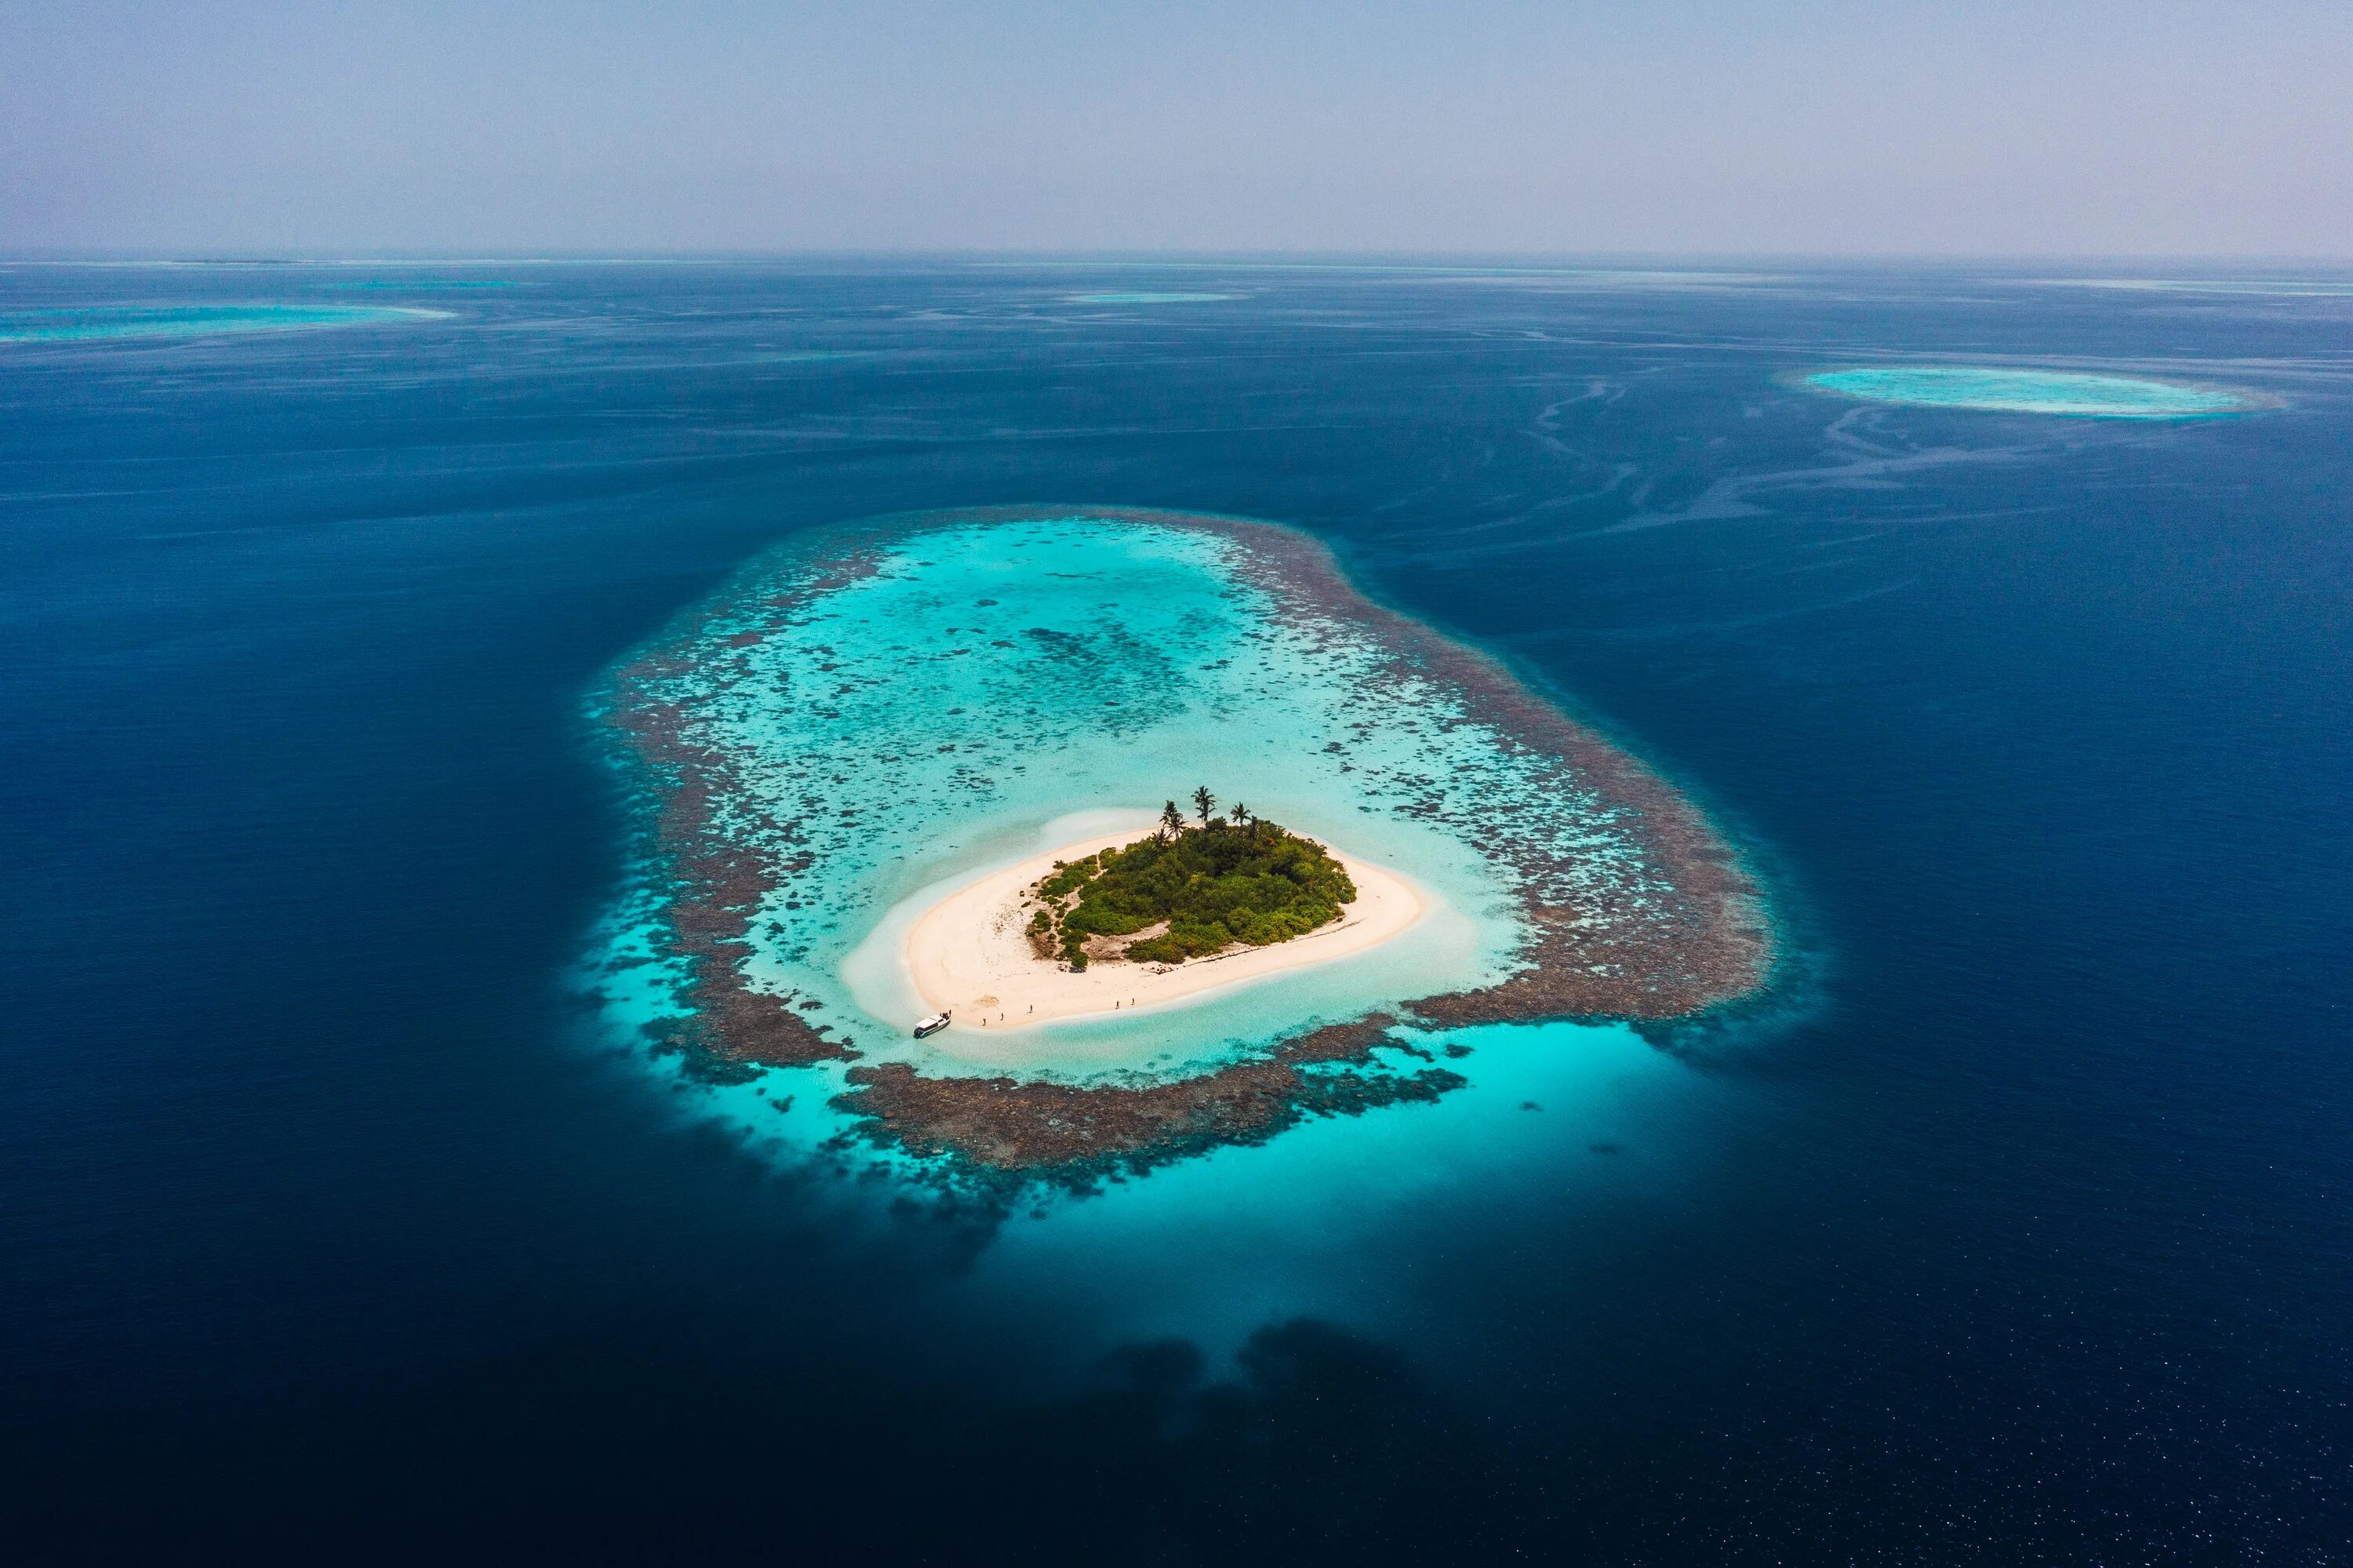 Атоллы Океании. Архипелаг Туамоту. Атолл в тихом океане. Атоллы Мальдив. Ntr island